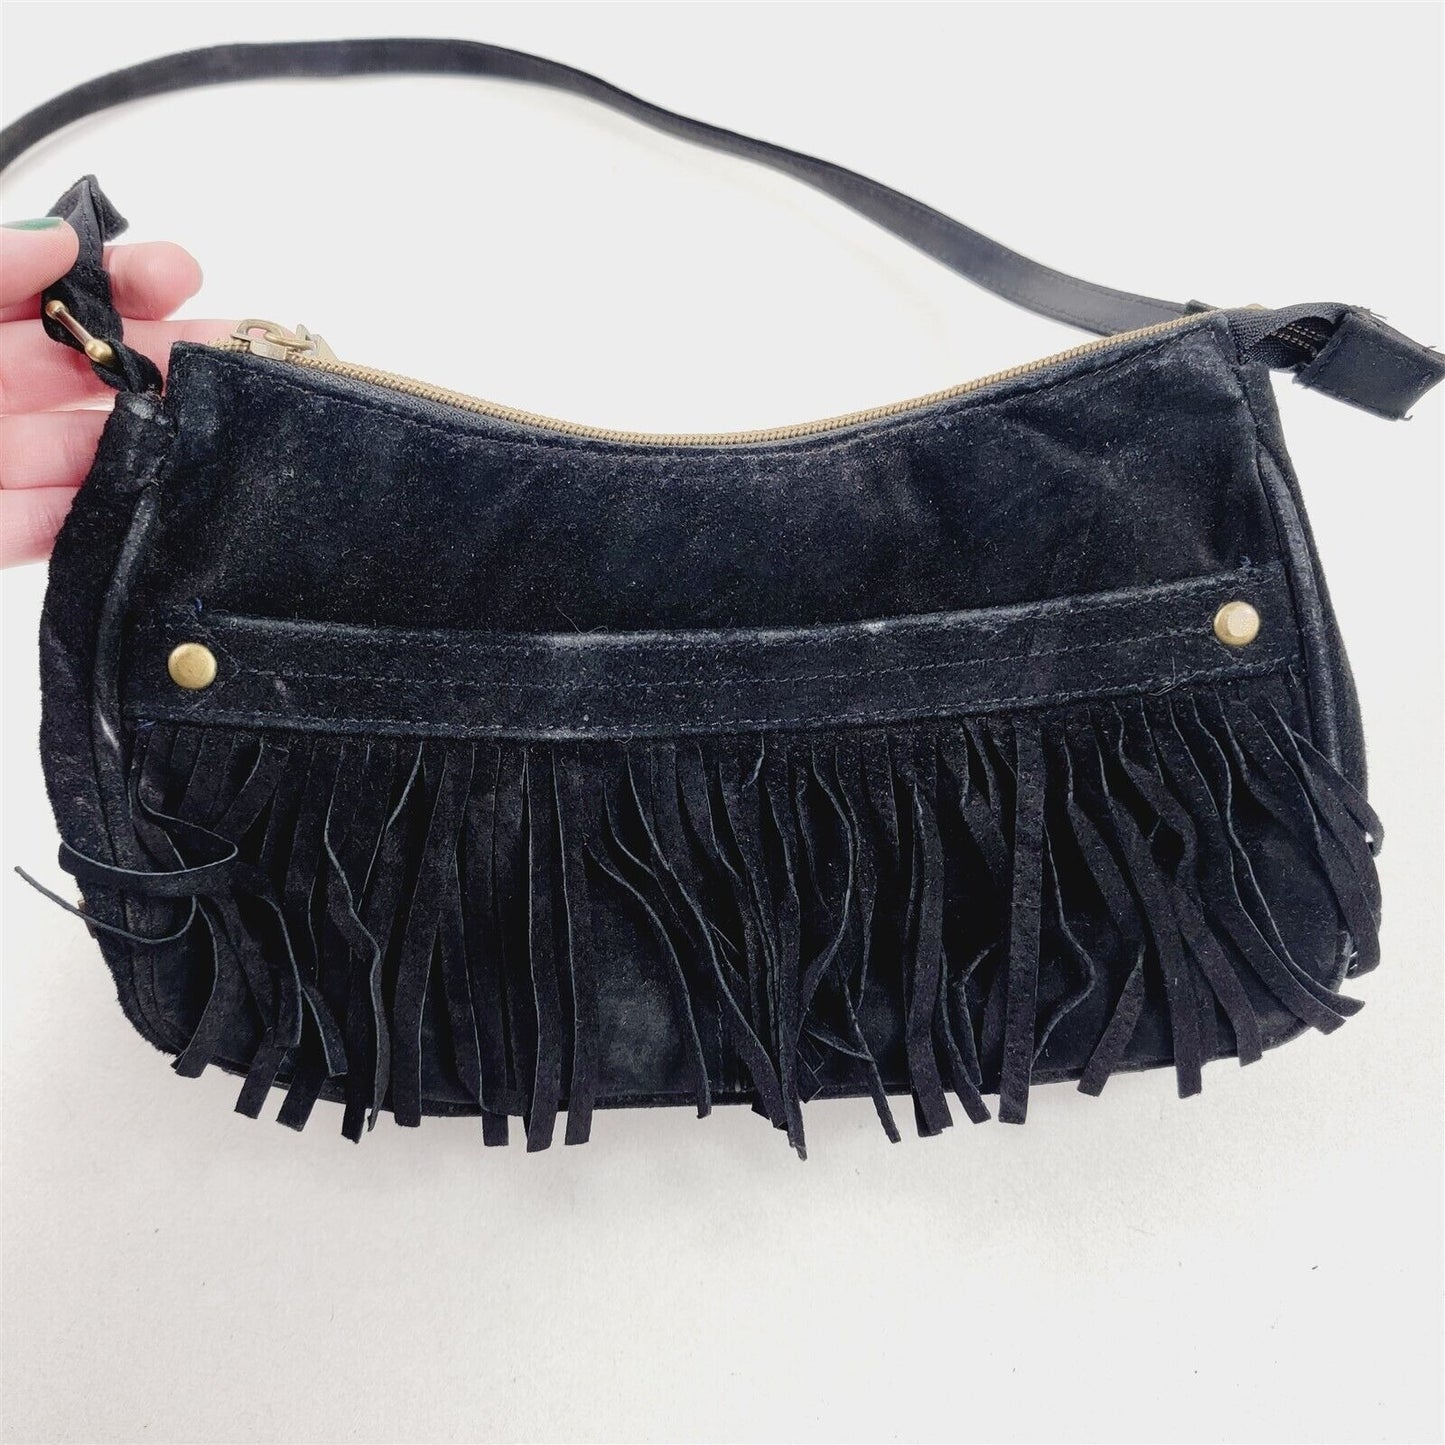 Vintage Frankie & Johnnie Black Leather Suded Purse Clutch Handbag Fringe Hippie